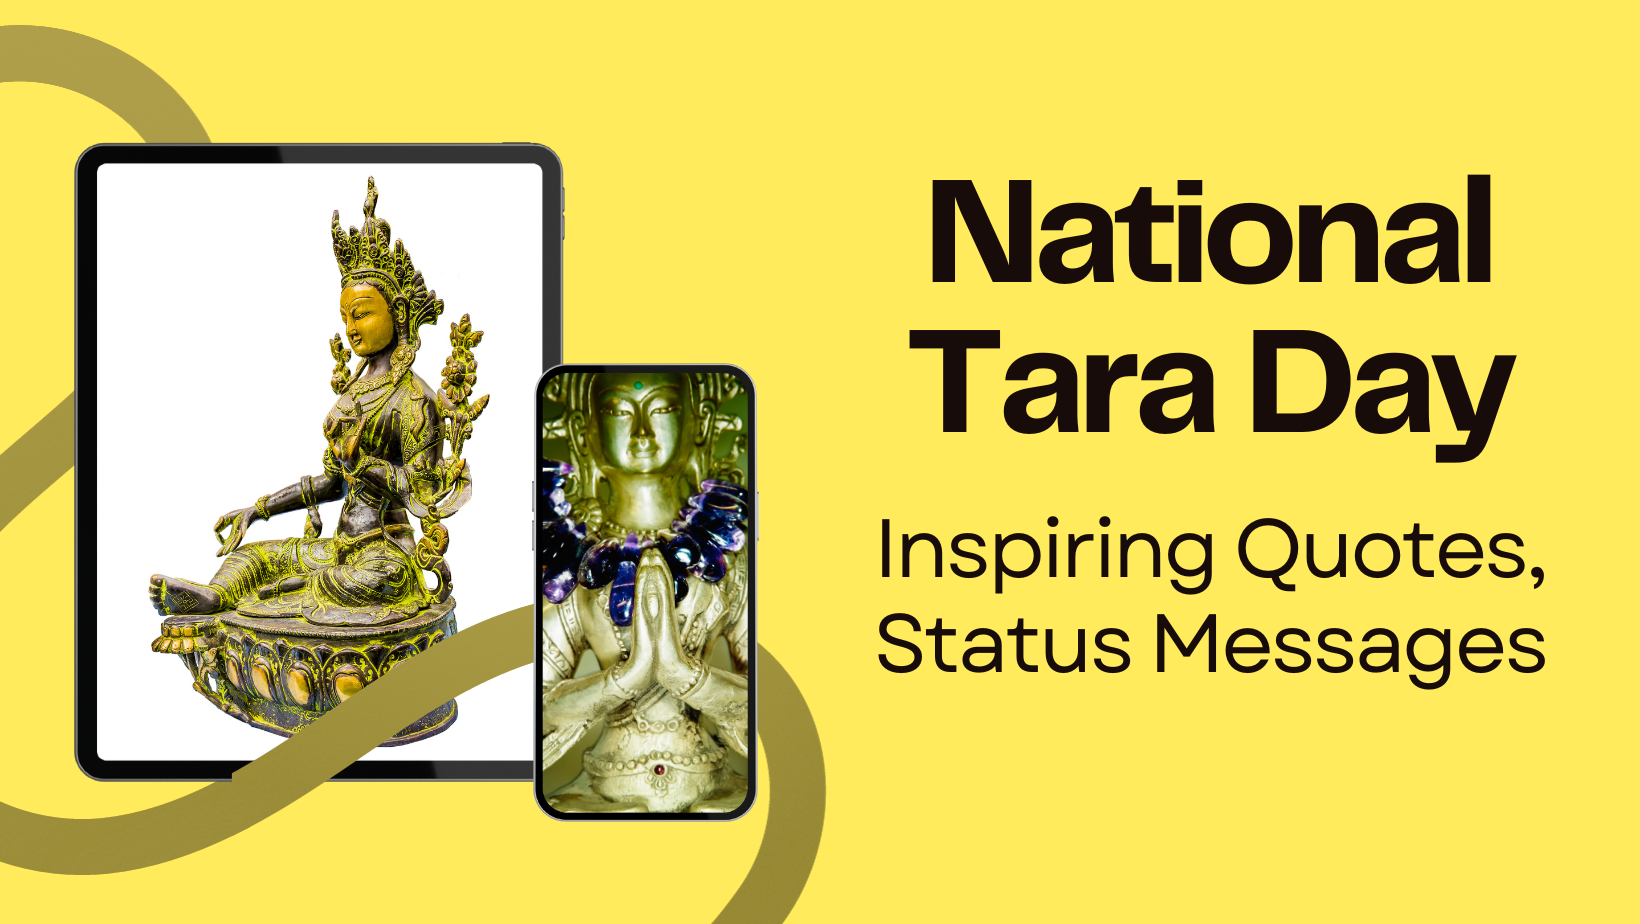 National Tara Day